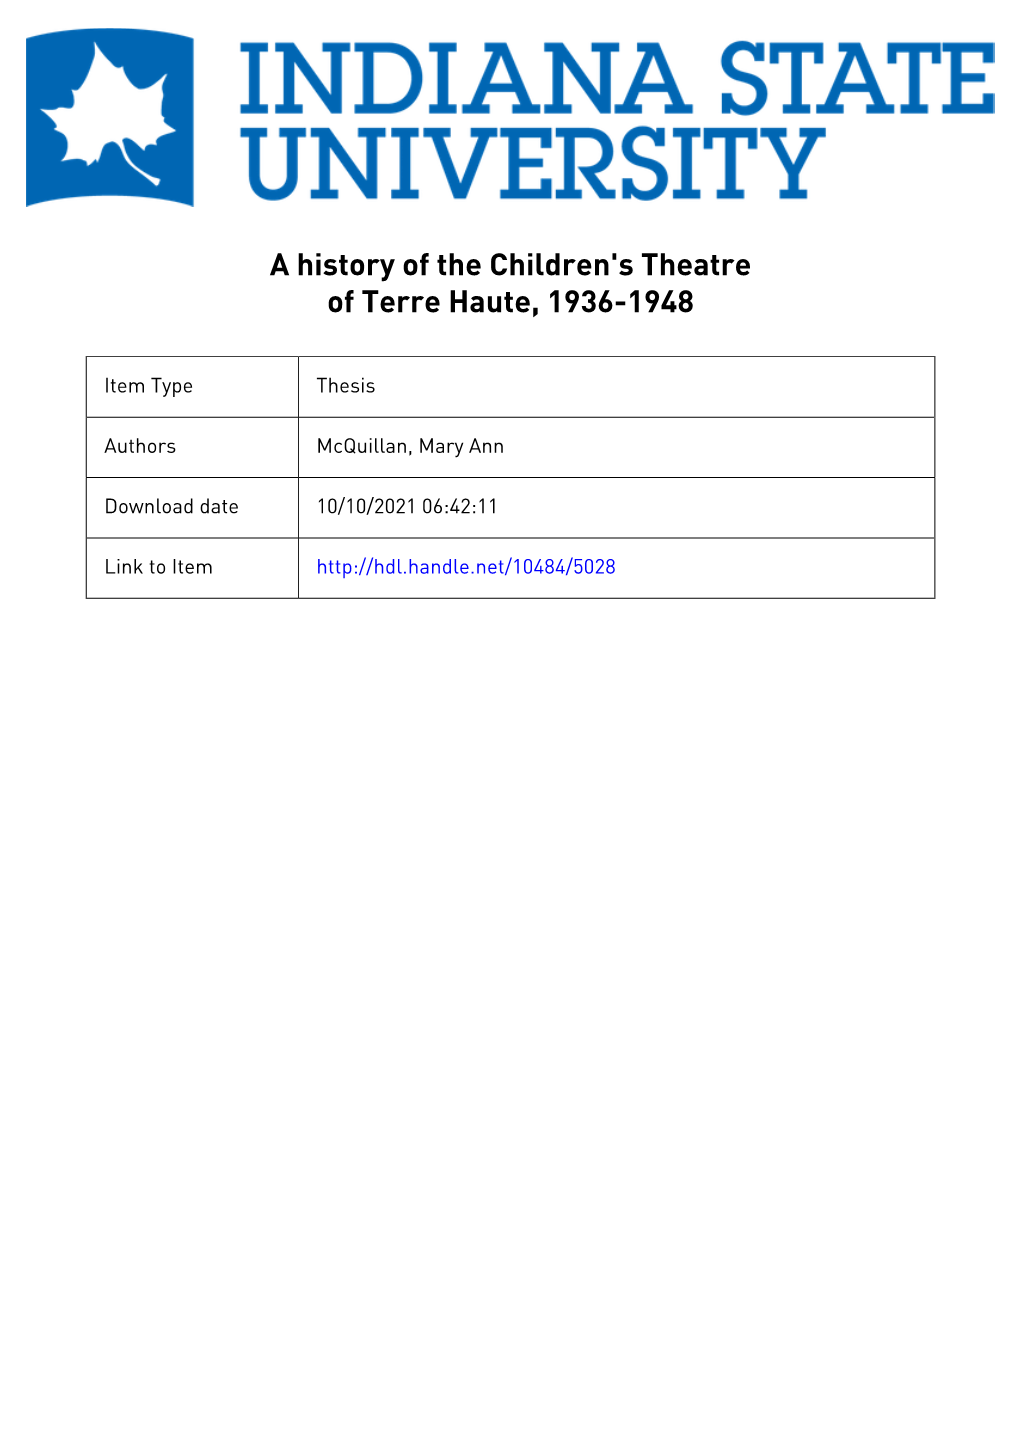 A History of the Children's Theatre of Terre Haute A